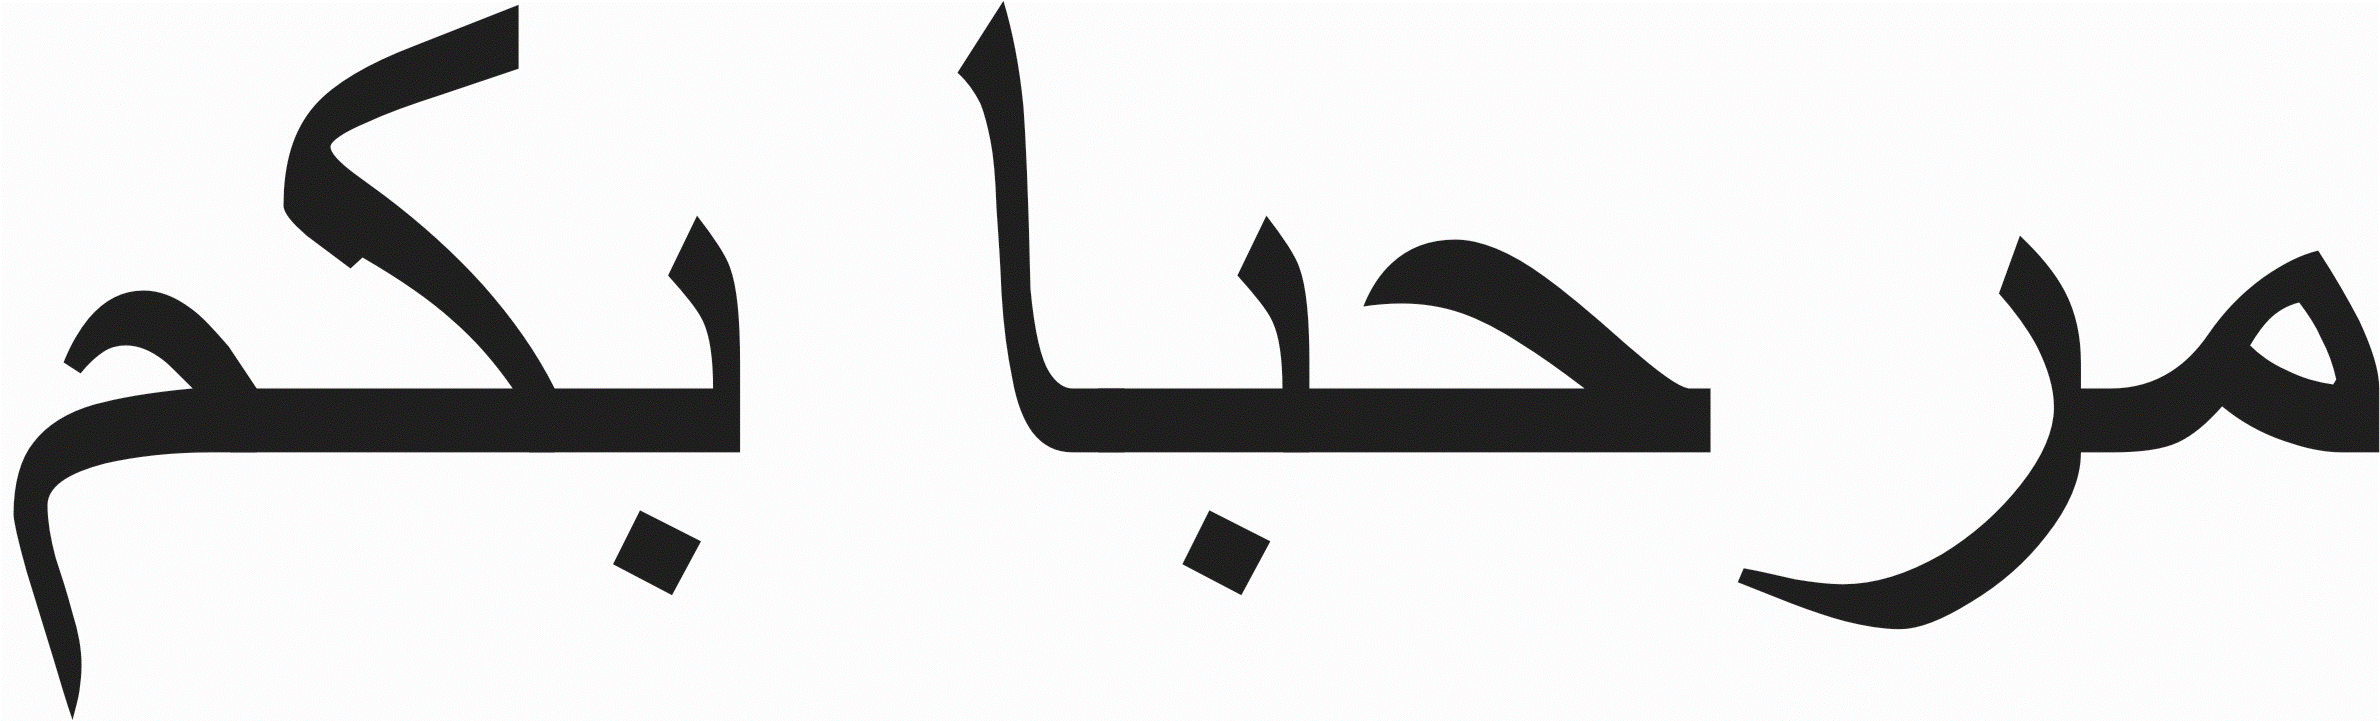 Marhaba arabic